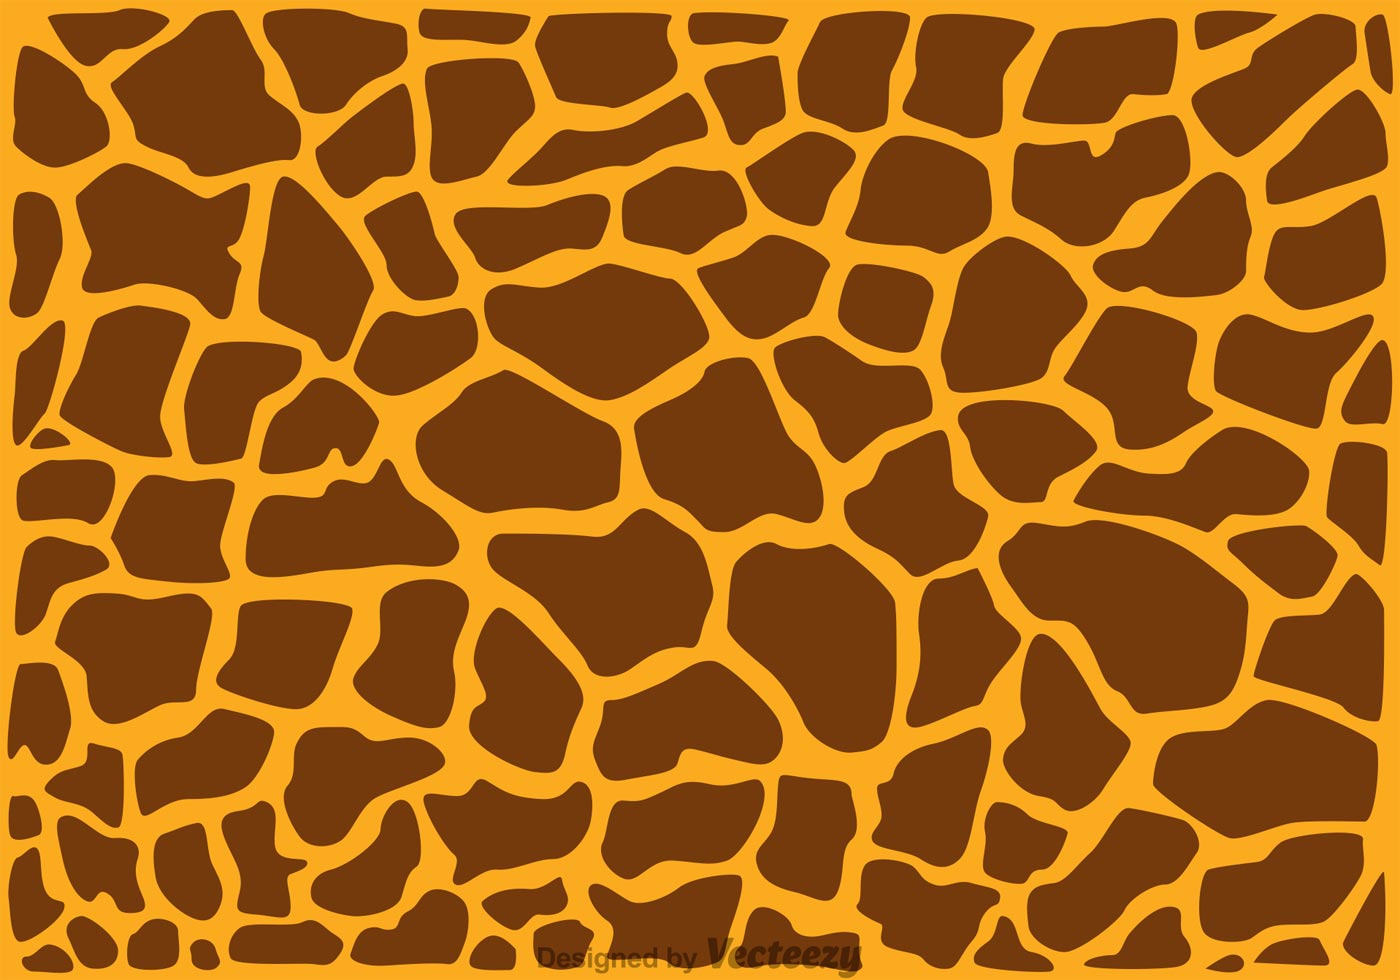 Giraffe Print Free Vector Art - (2574 Free Downloads)